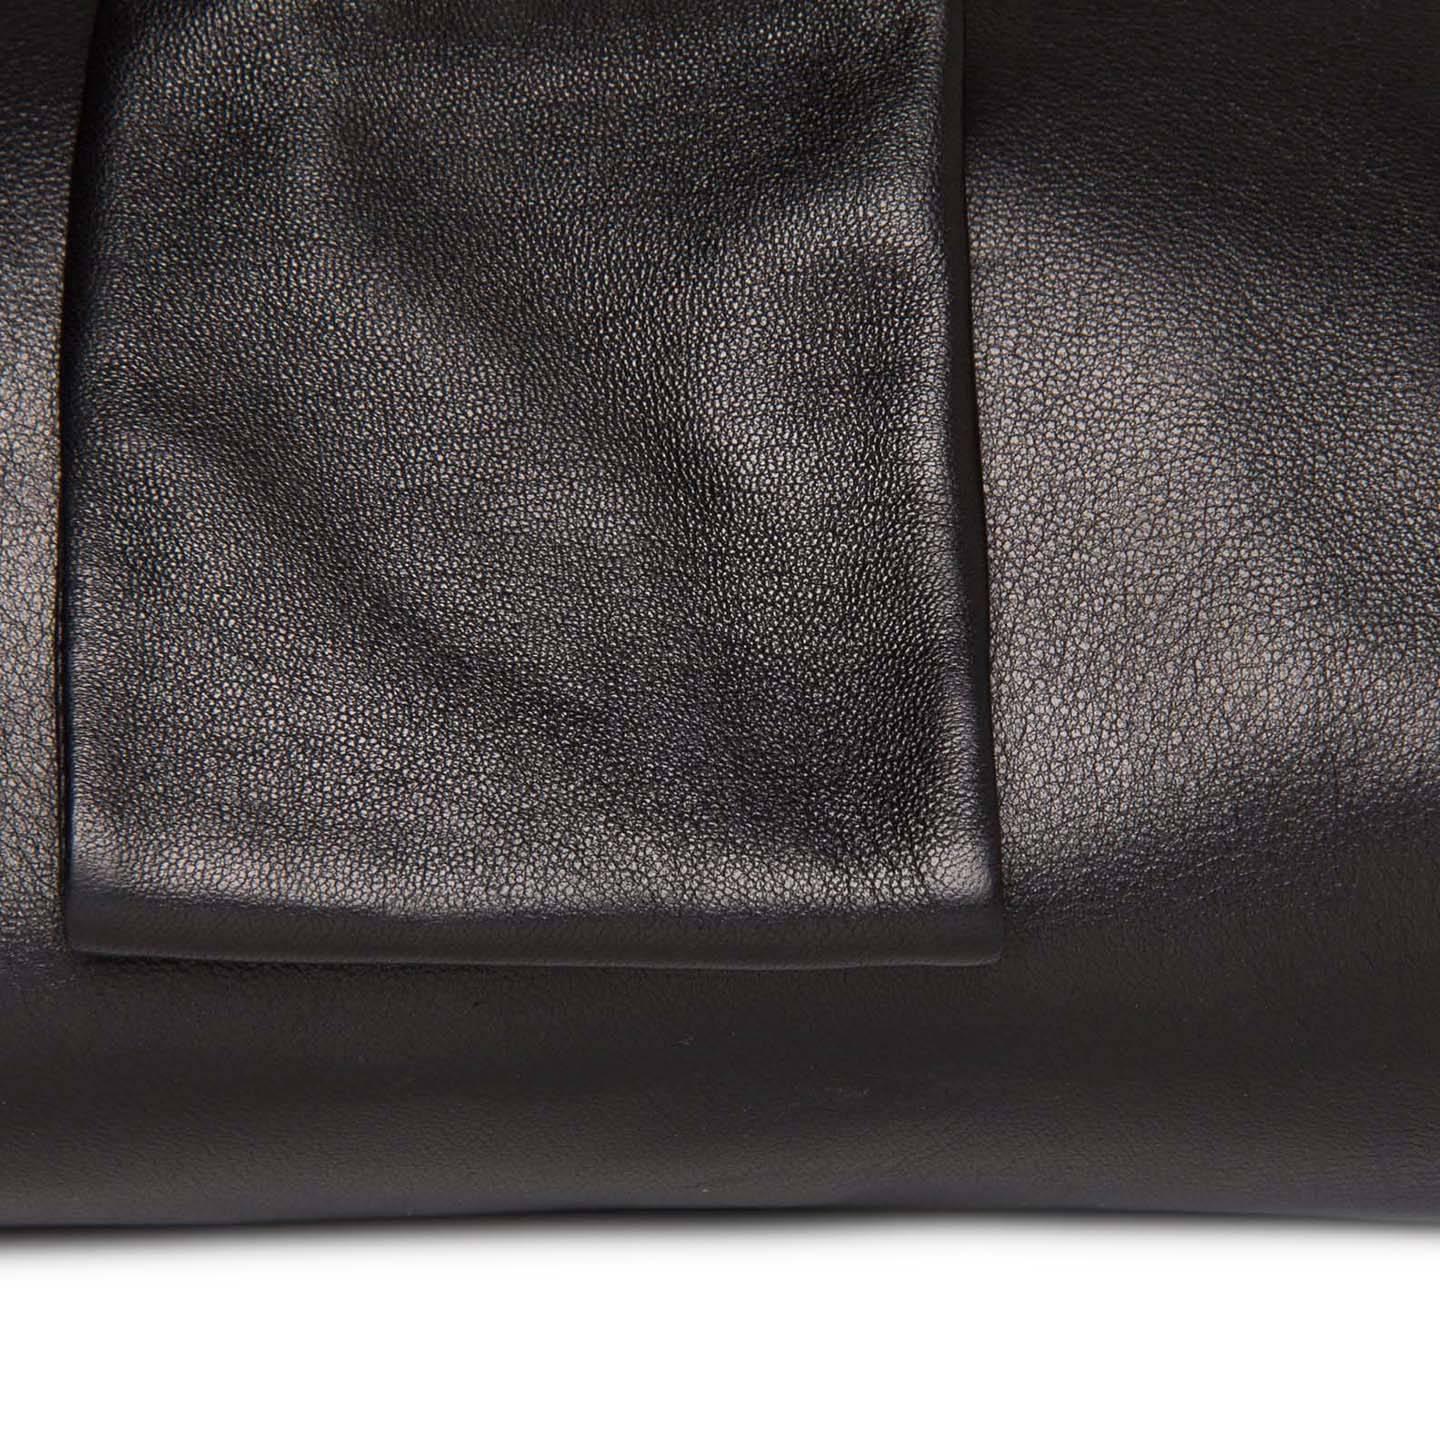 black clutch bag with wrist strap